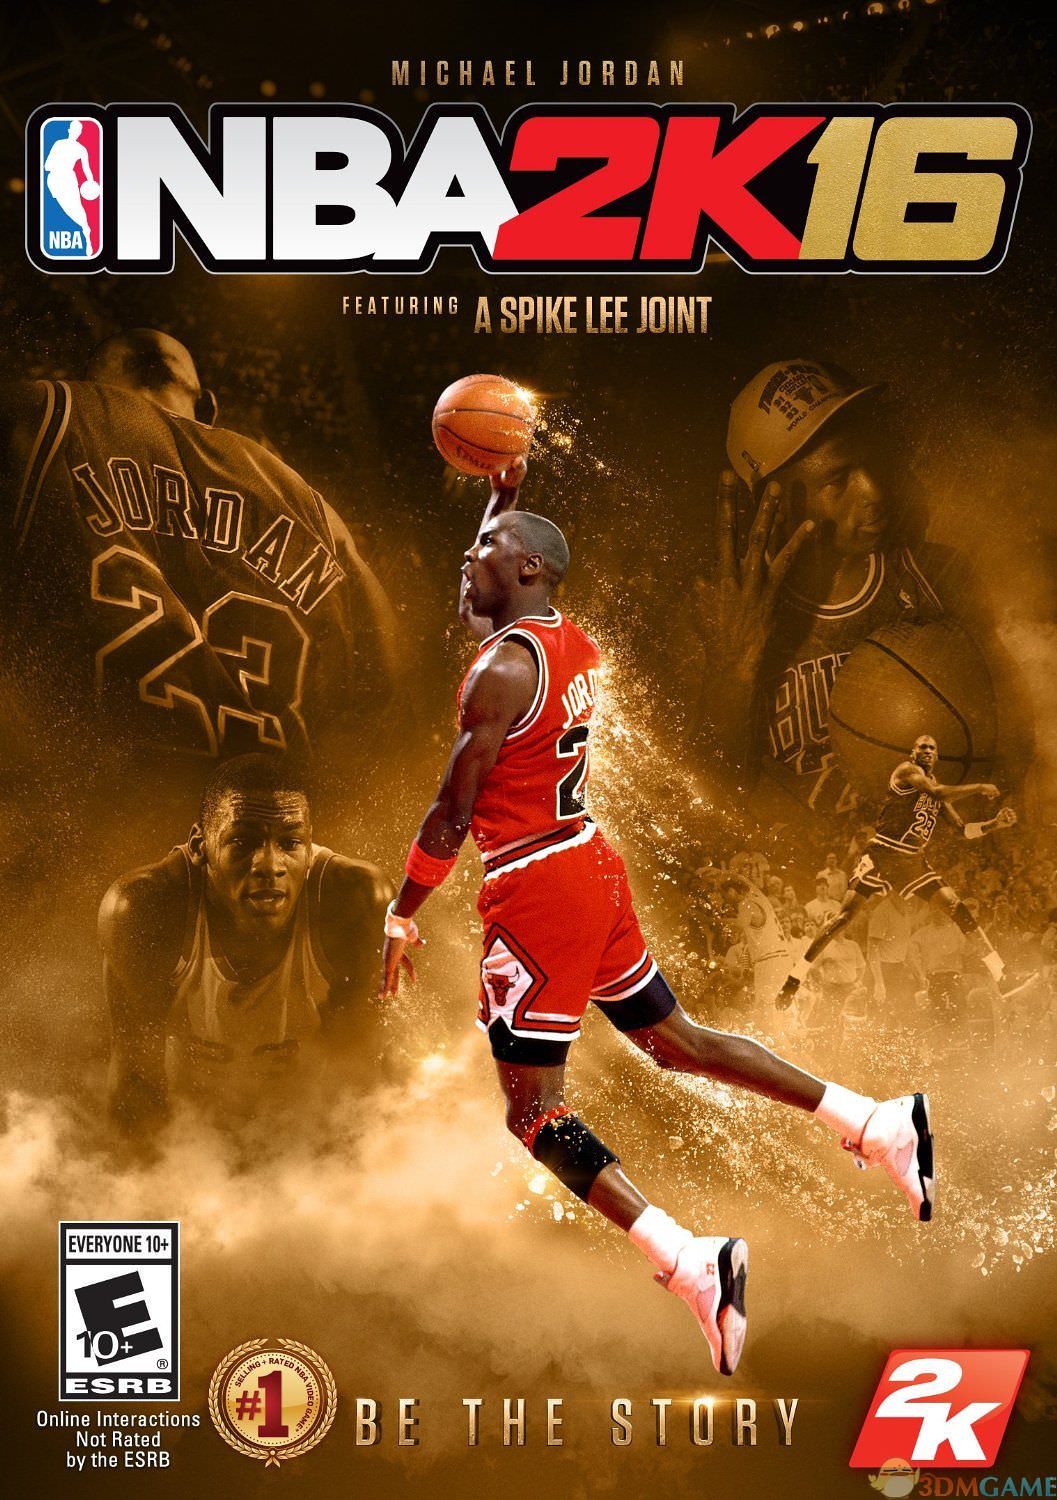 Download NBA 2k16 Full Game Free PC (Michael Jordan Edition - 3DM Cracked)